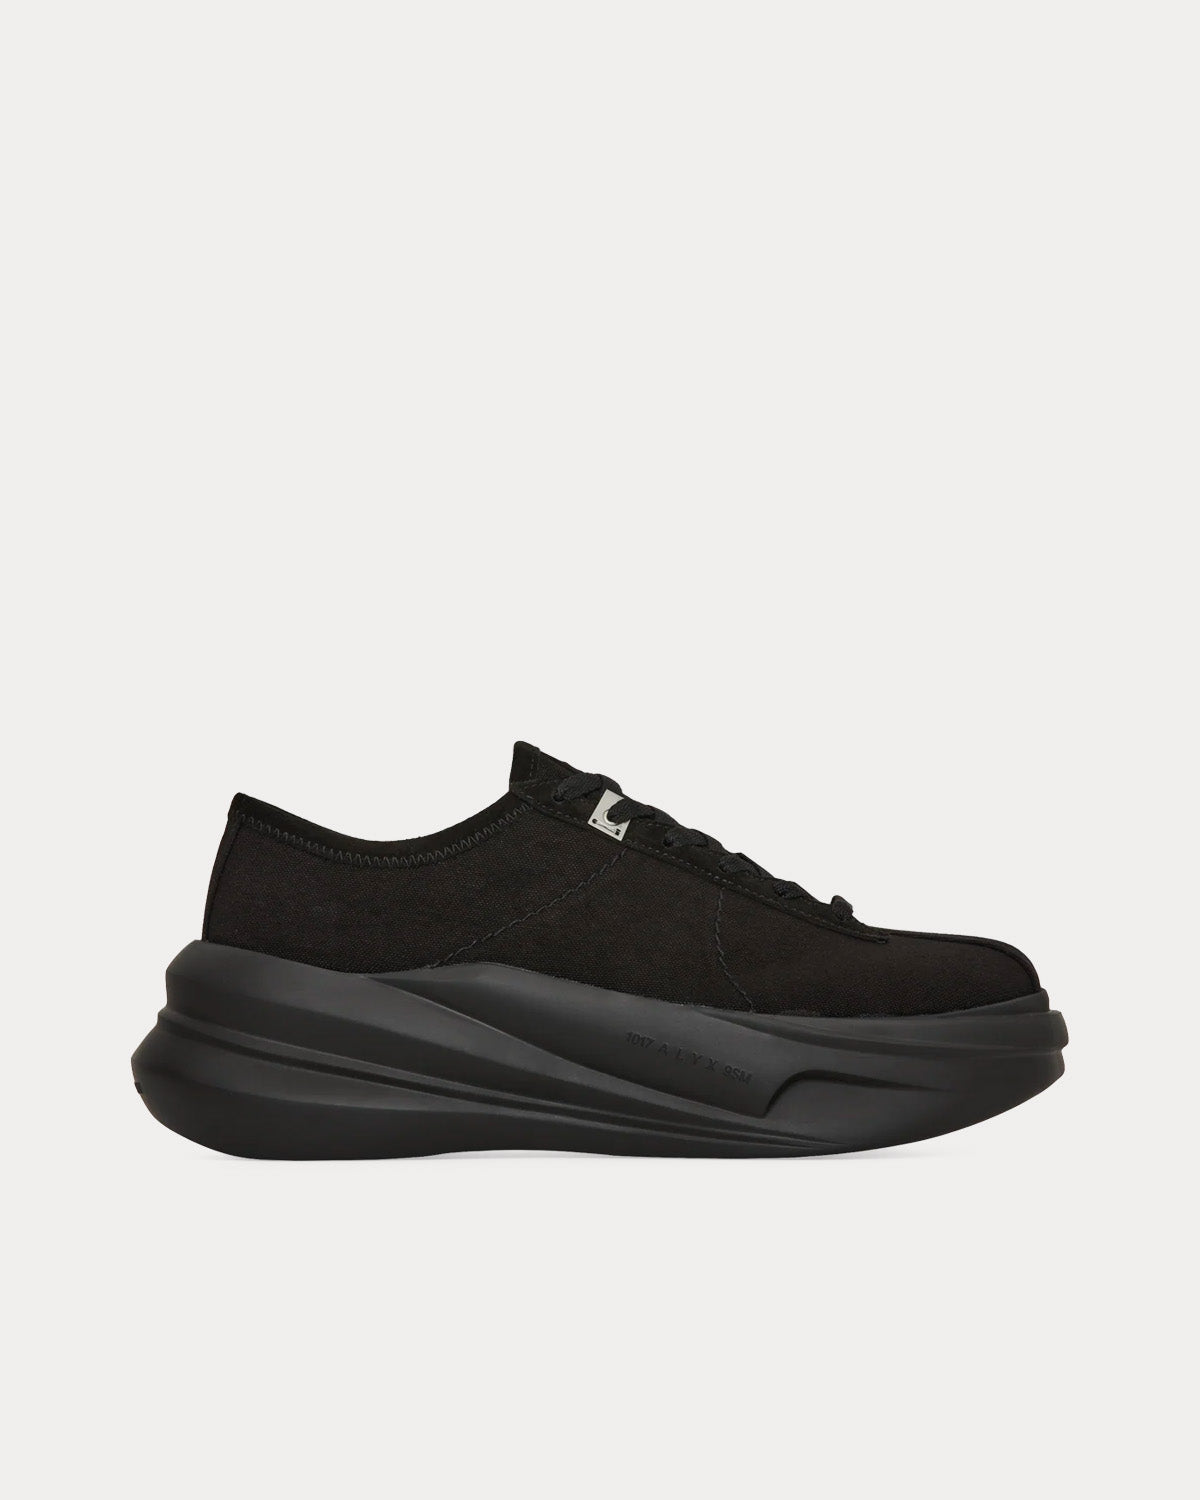 1017 ALYX 9SM - Aria Black Low Top Sneakers